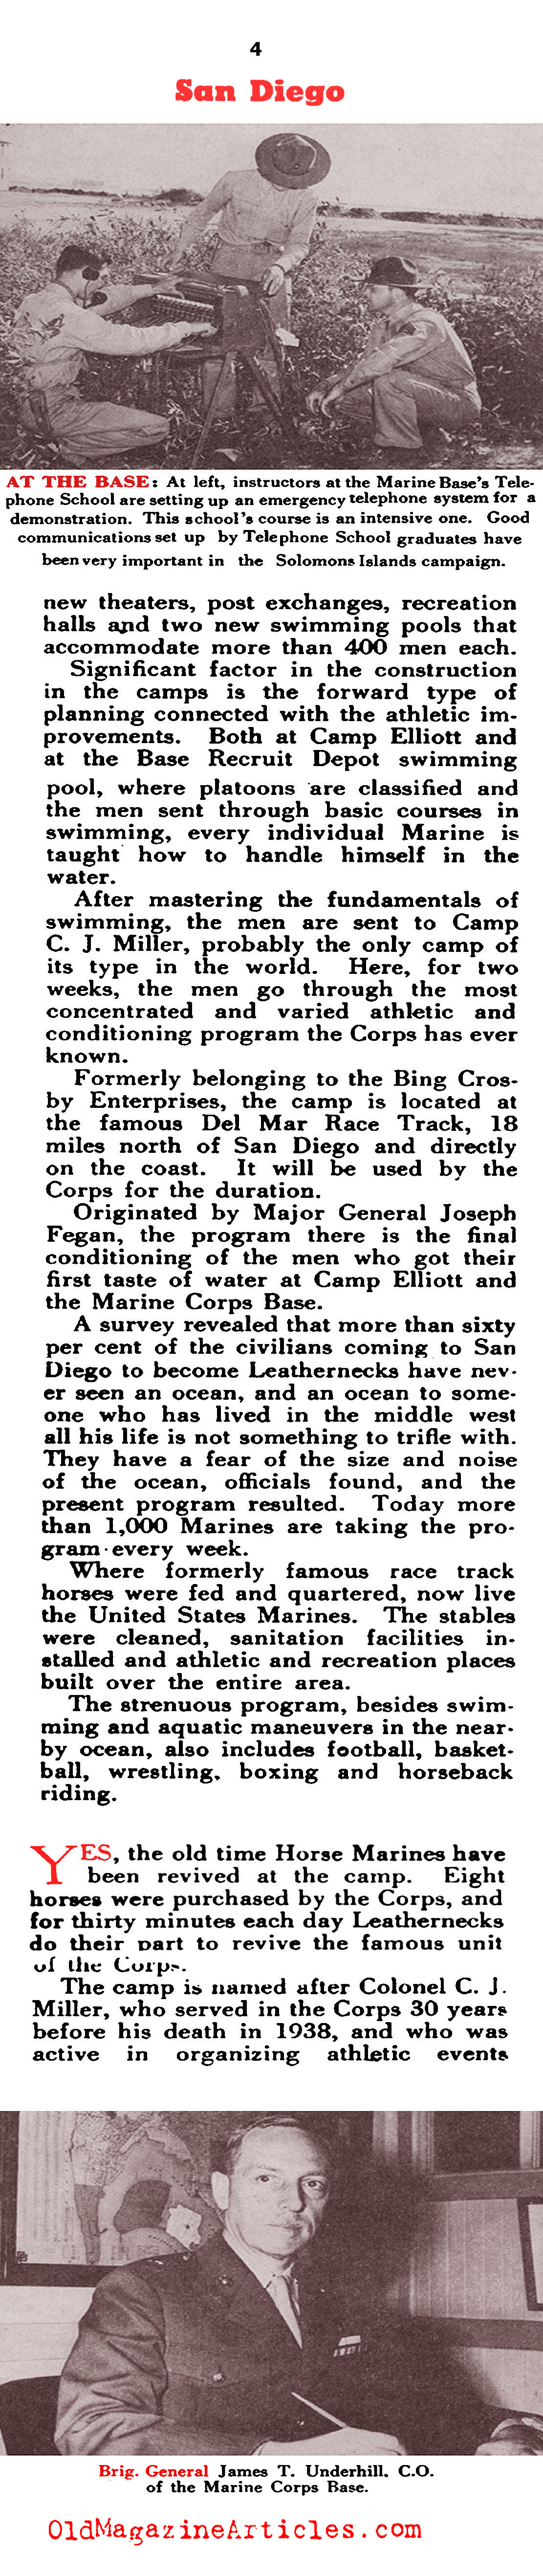 Training Marines in San Diego (Leatherneck Magazine, 1943)